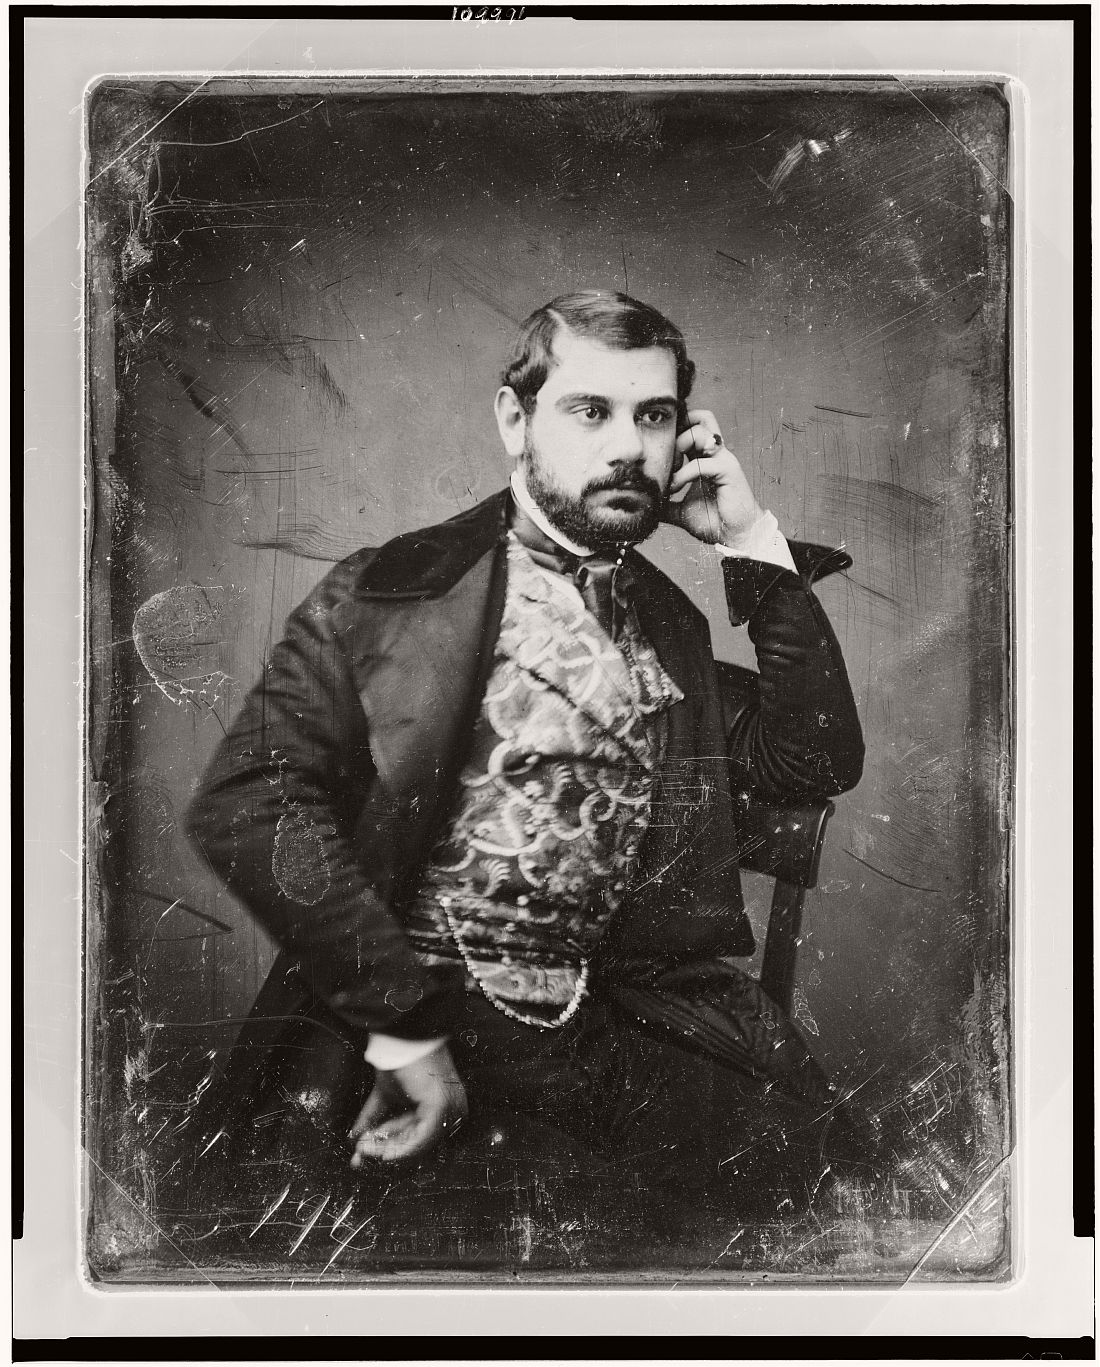 vintage-daguerreotype-portraits-from-xix-century-1844-1860-41